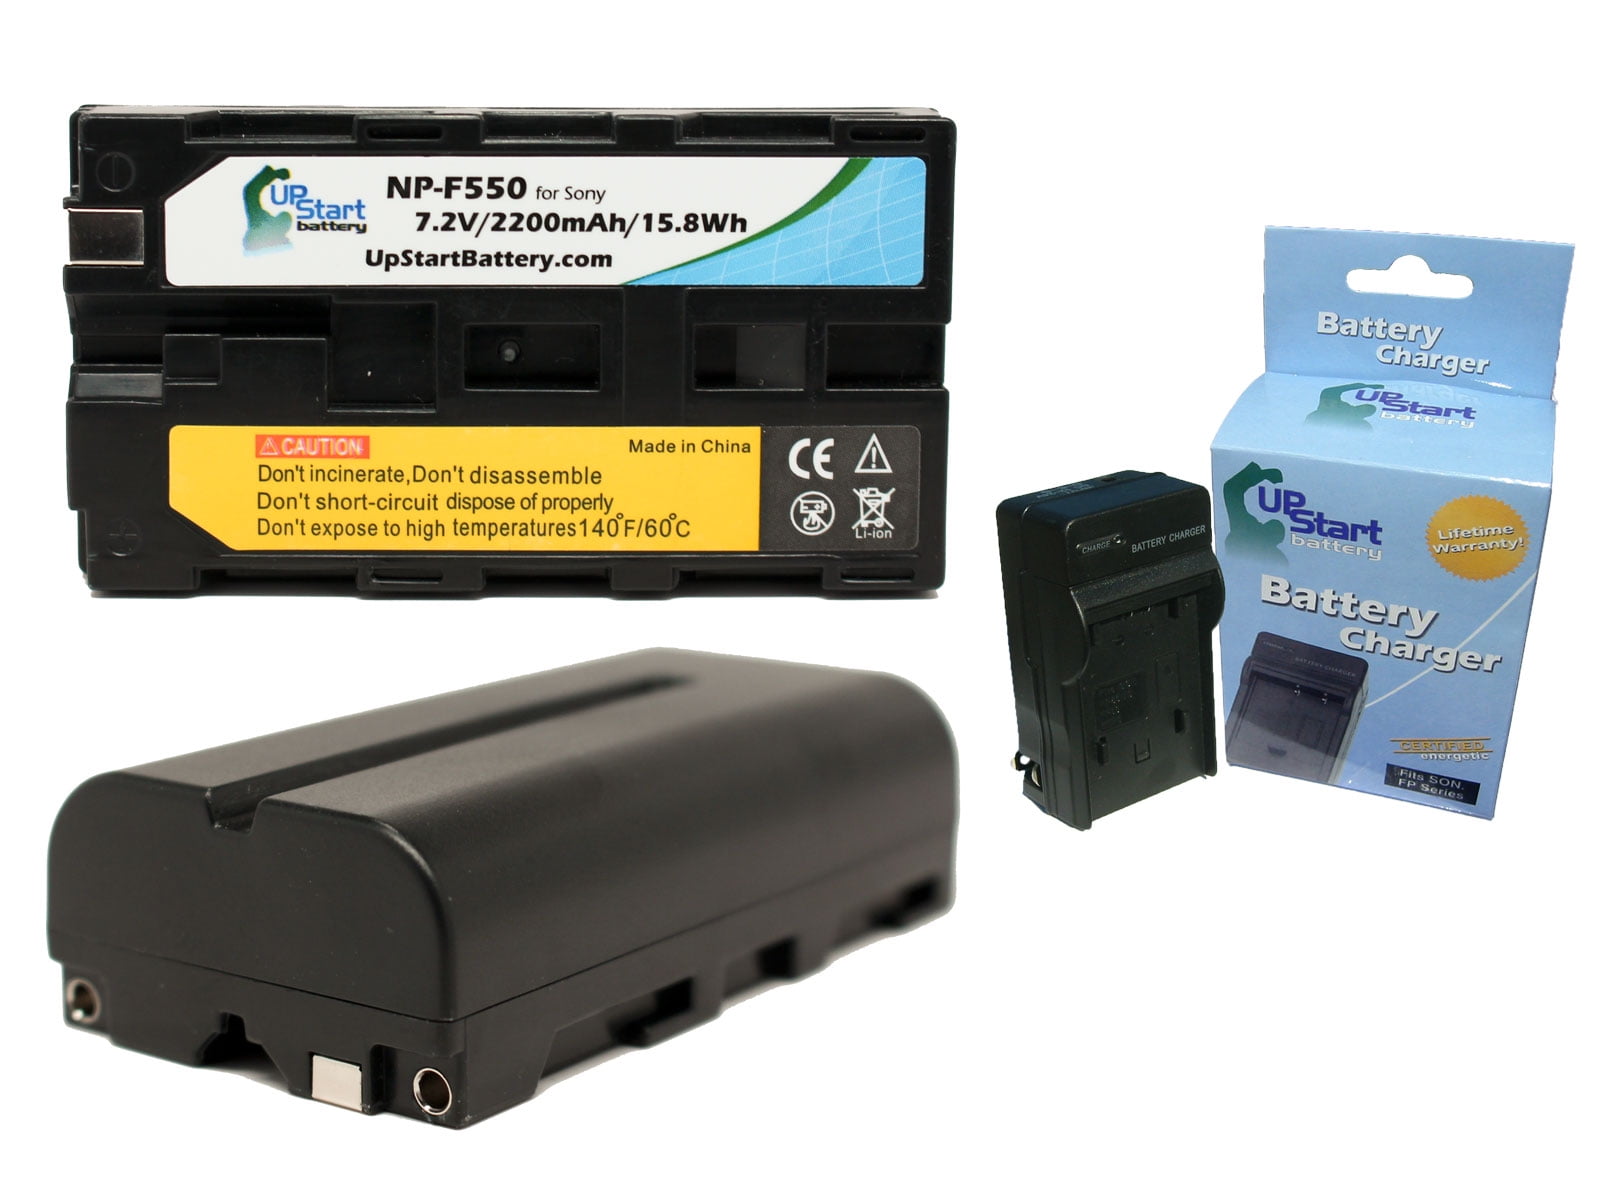 LEMAI® 10x 2200mAh 3.7V 16340 CR123A Rechargeable Li-ion Battery +